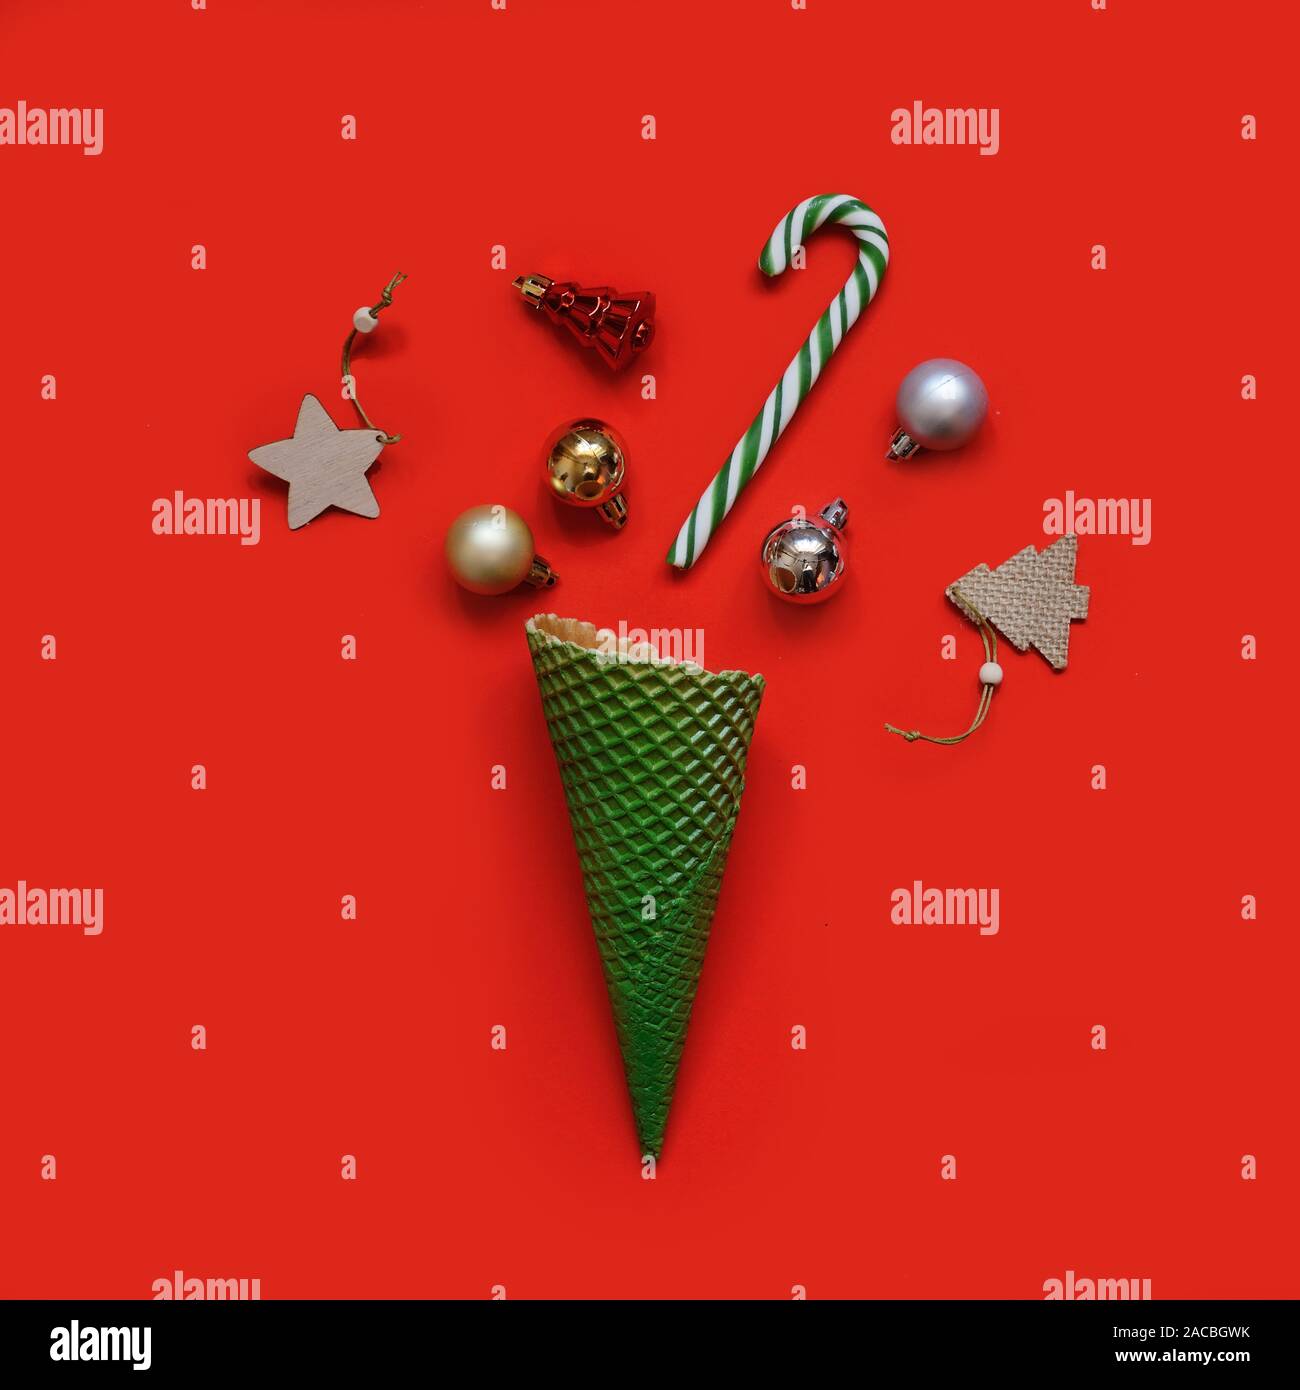 Creative minimal christmas art. Christmas decorative creative background with various Christmas objects Stock Photo